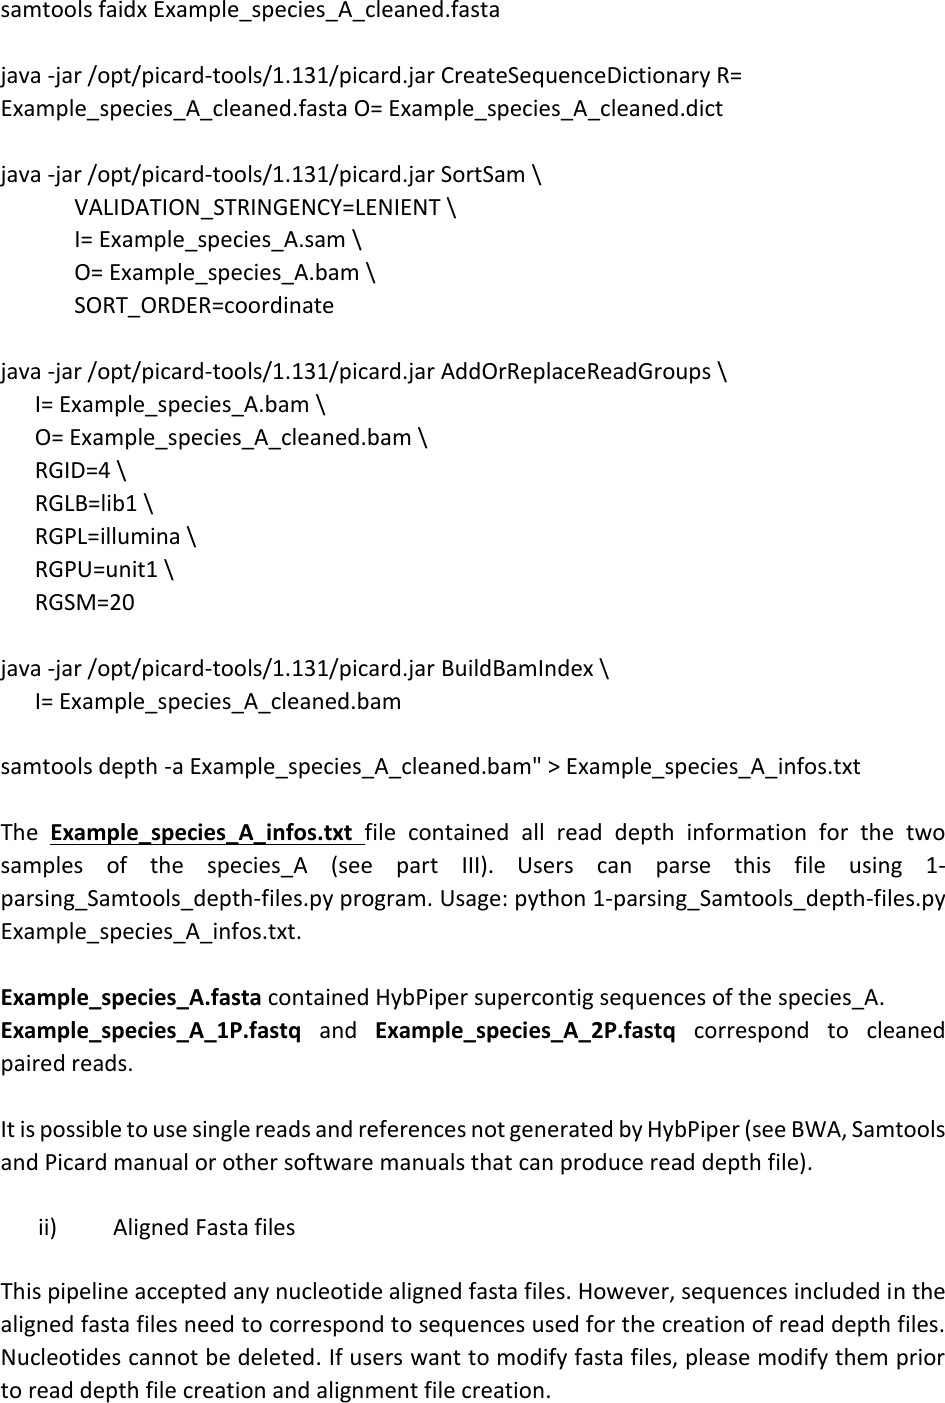 Page 4 of 10 - NGS-Indel Coder Manual